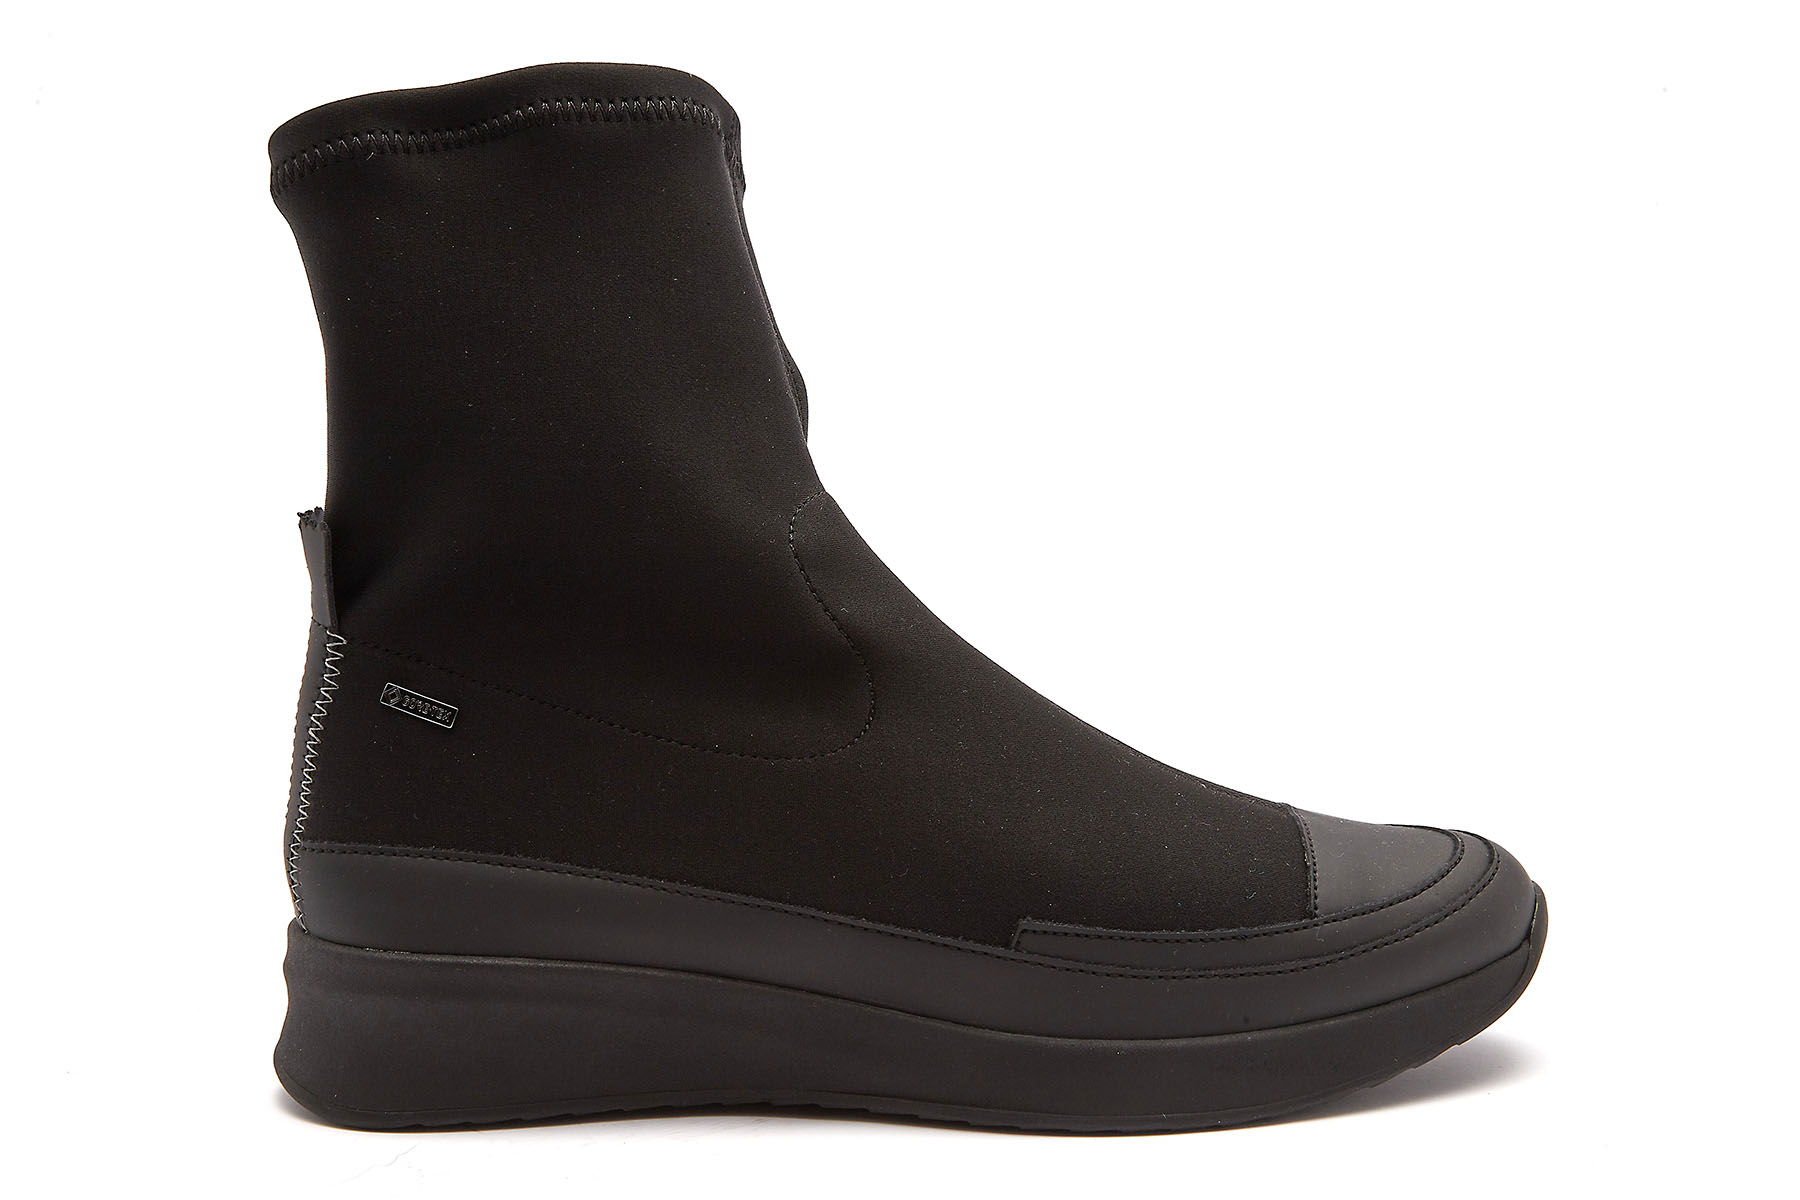 Women's Ankle Boots Gore-Tex HOGL 2-103718 Black Level | Apia